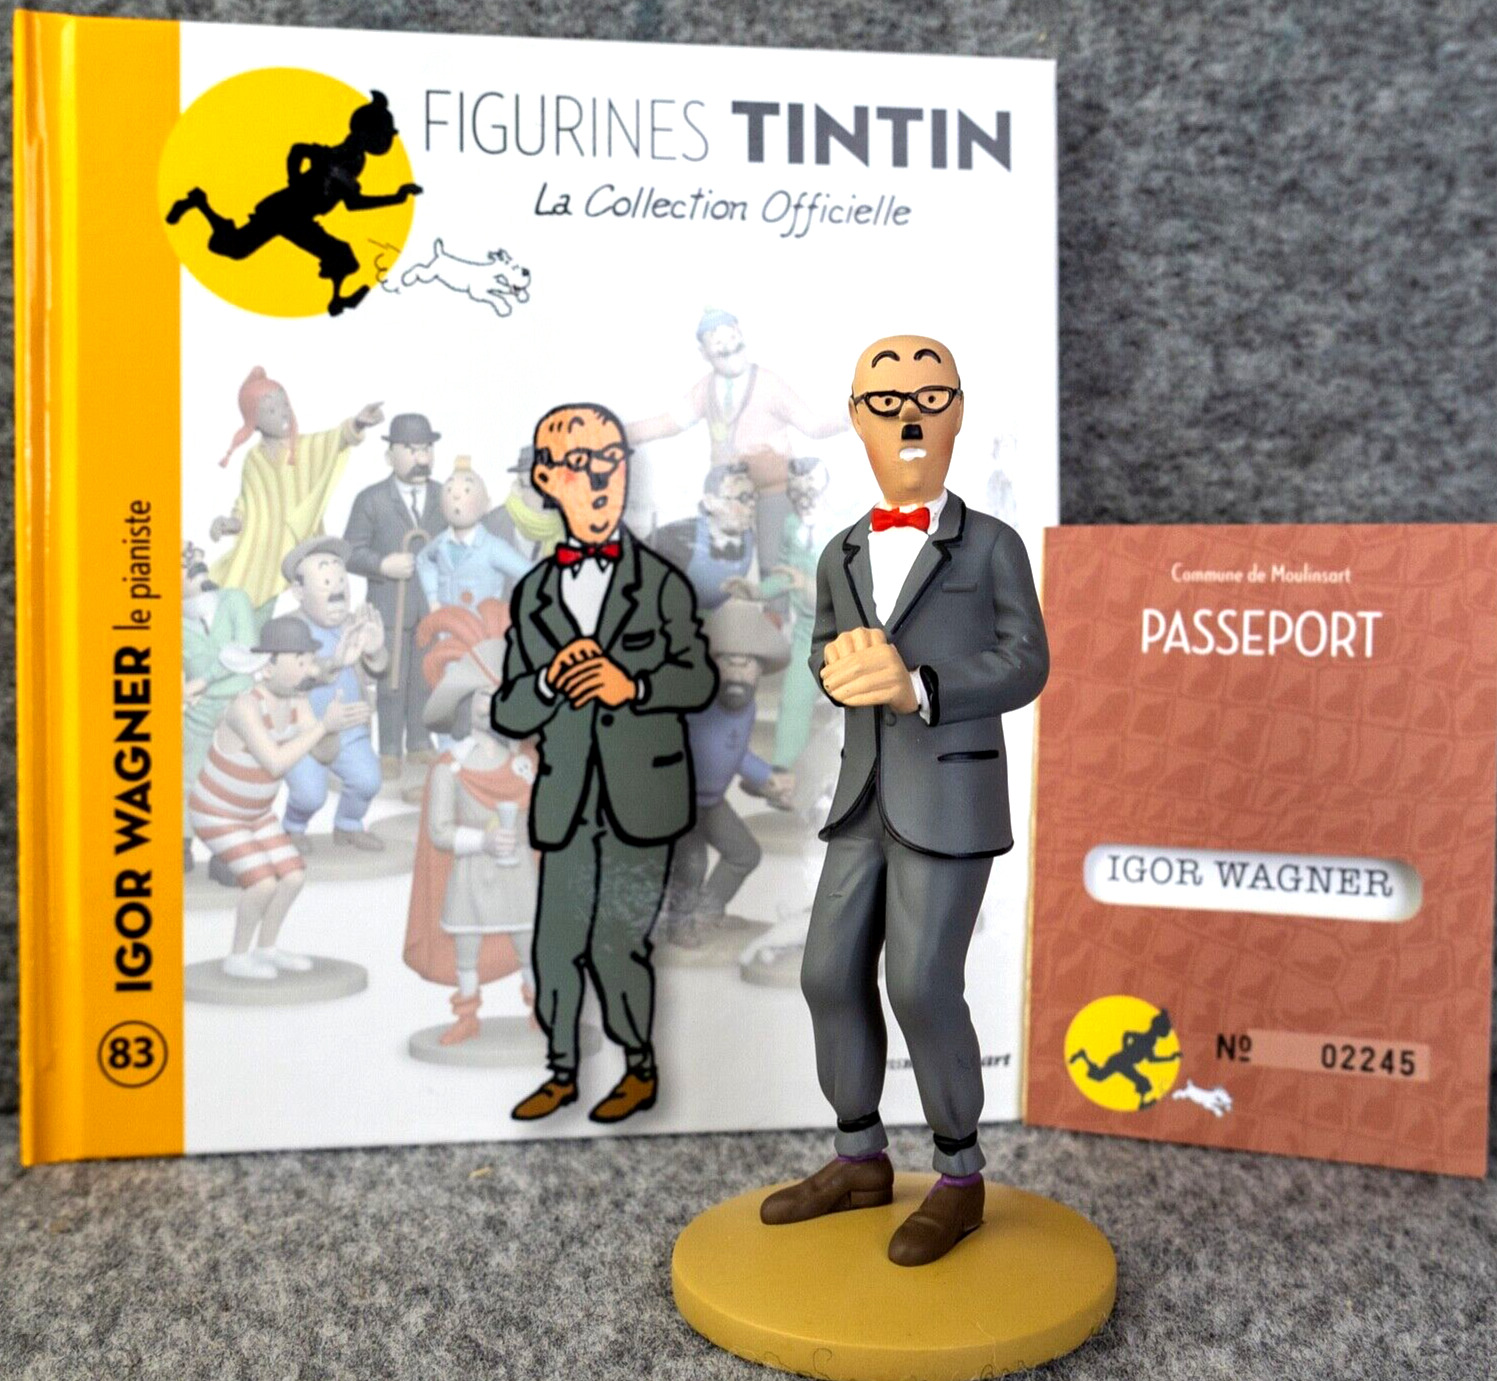 Tintin Figurines Officielle #83 Igor Wagner: Castafiore Emerald ML Resin model